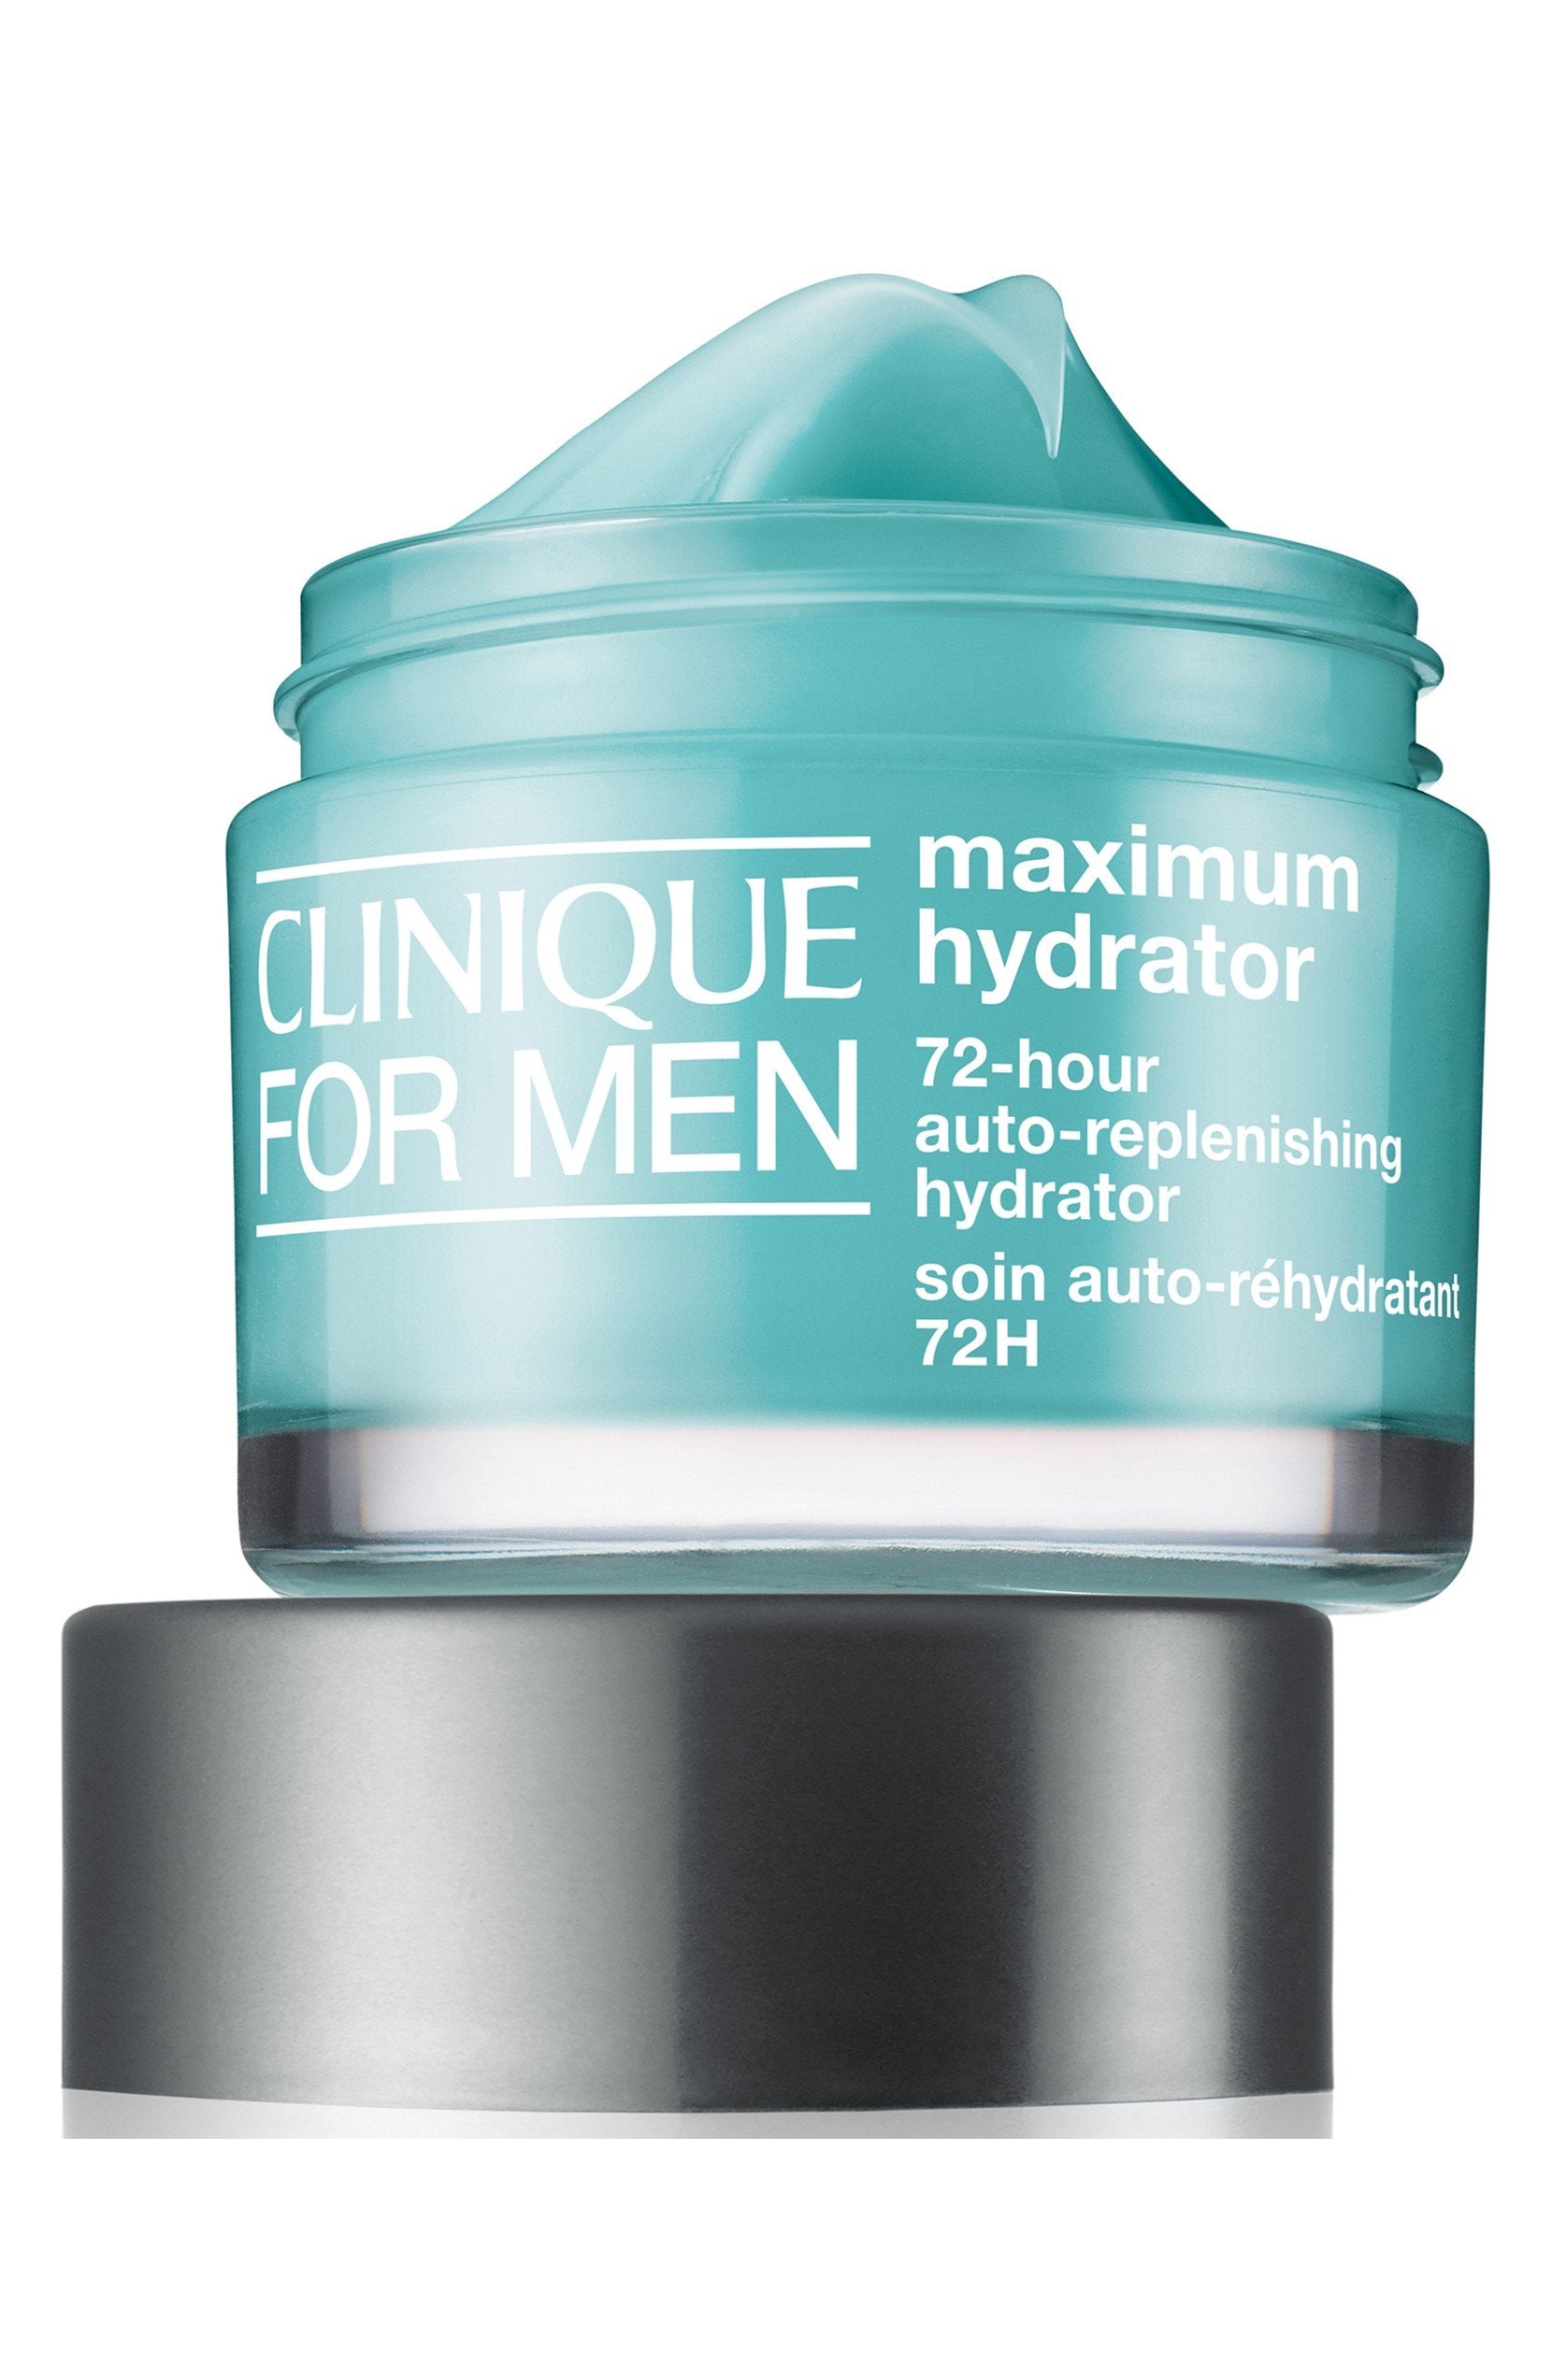 Clinique For Men Maximum Hydrator 72-Hour Auto-Replenishing Hydrator - eCosmeticWorld